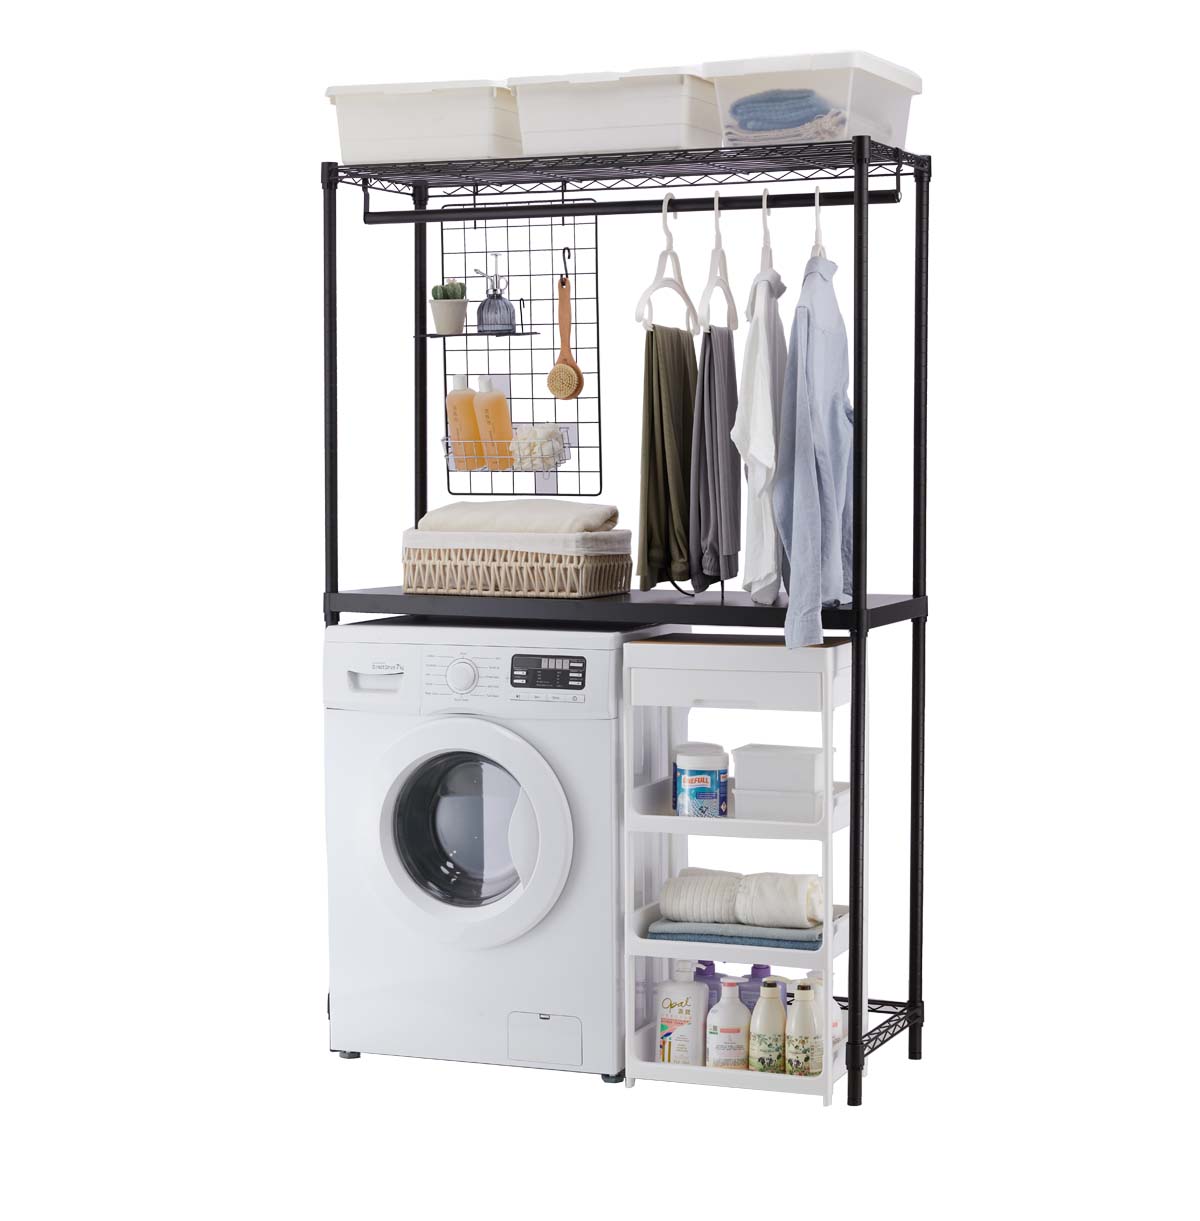 2-Tier Washing Machine Storage Rack with Hanging Rod and Basket